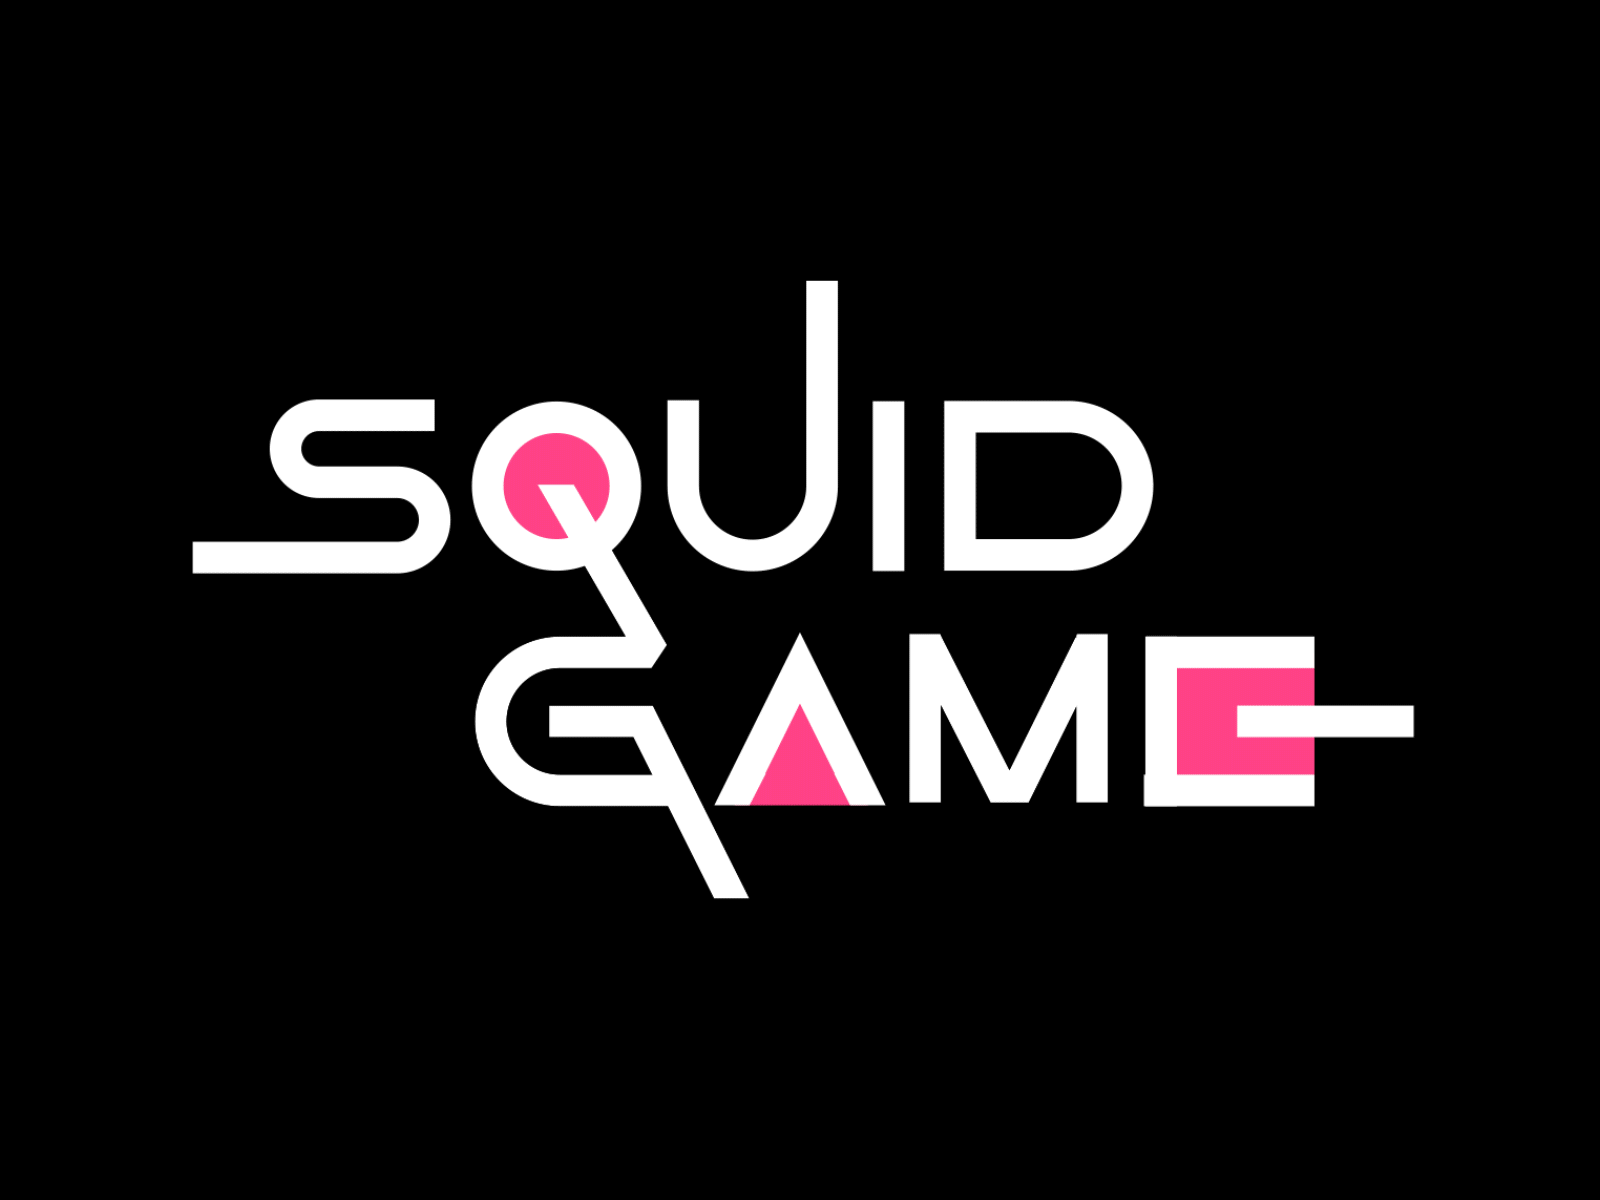 Squid Game Intro/Logo Animation (English Version)